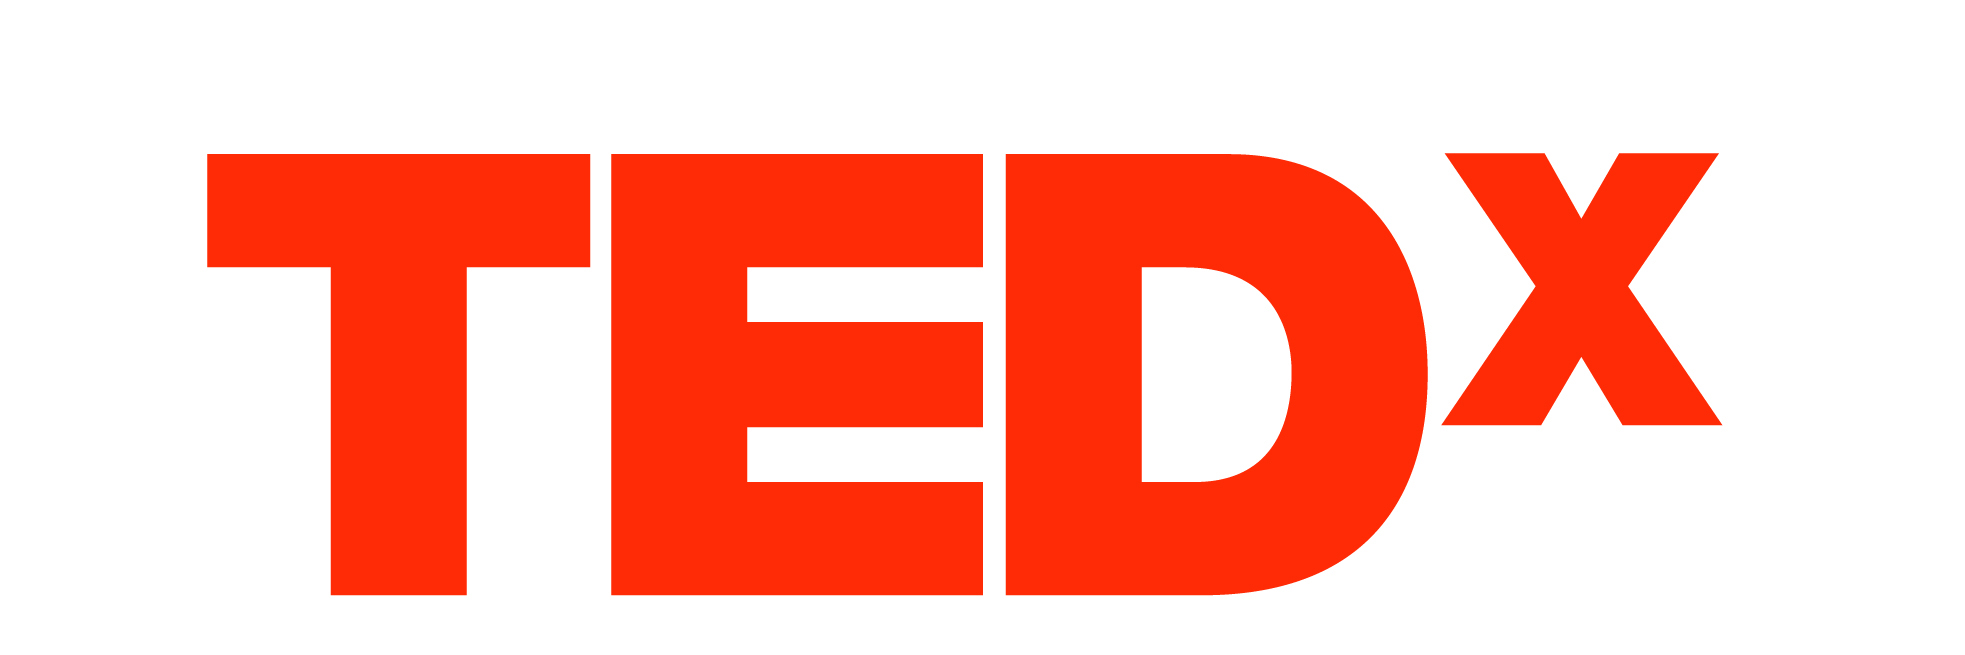 TEDx.jpg